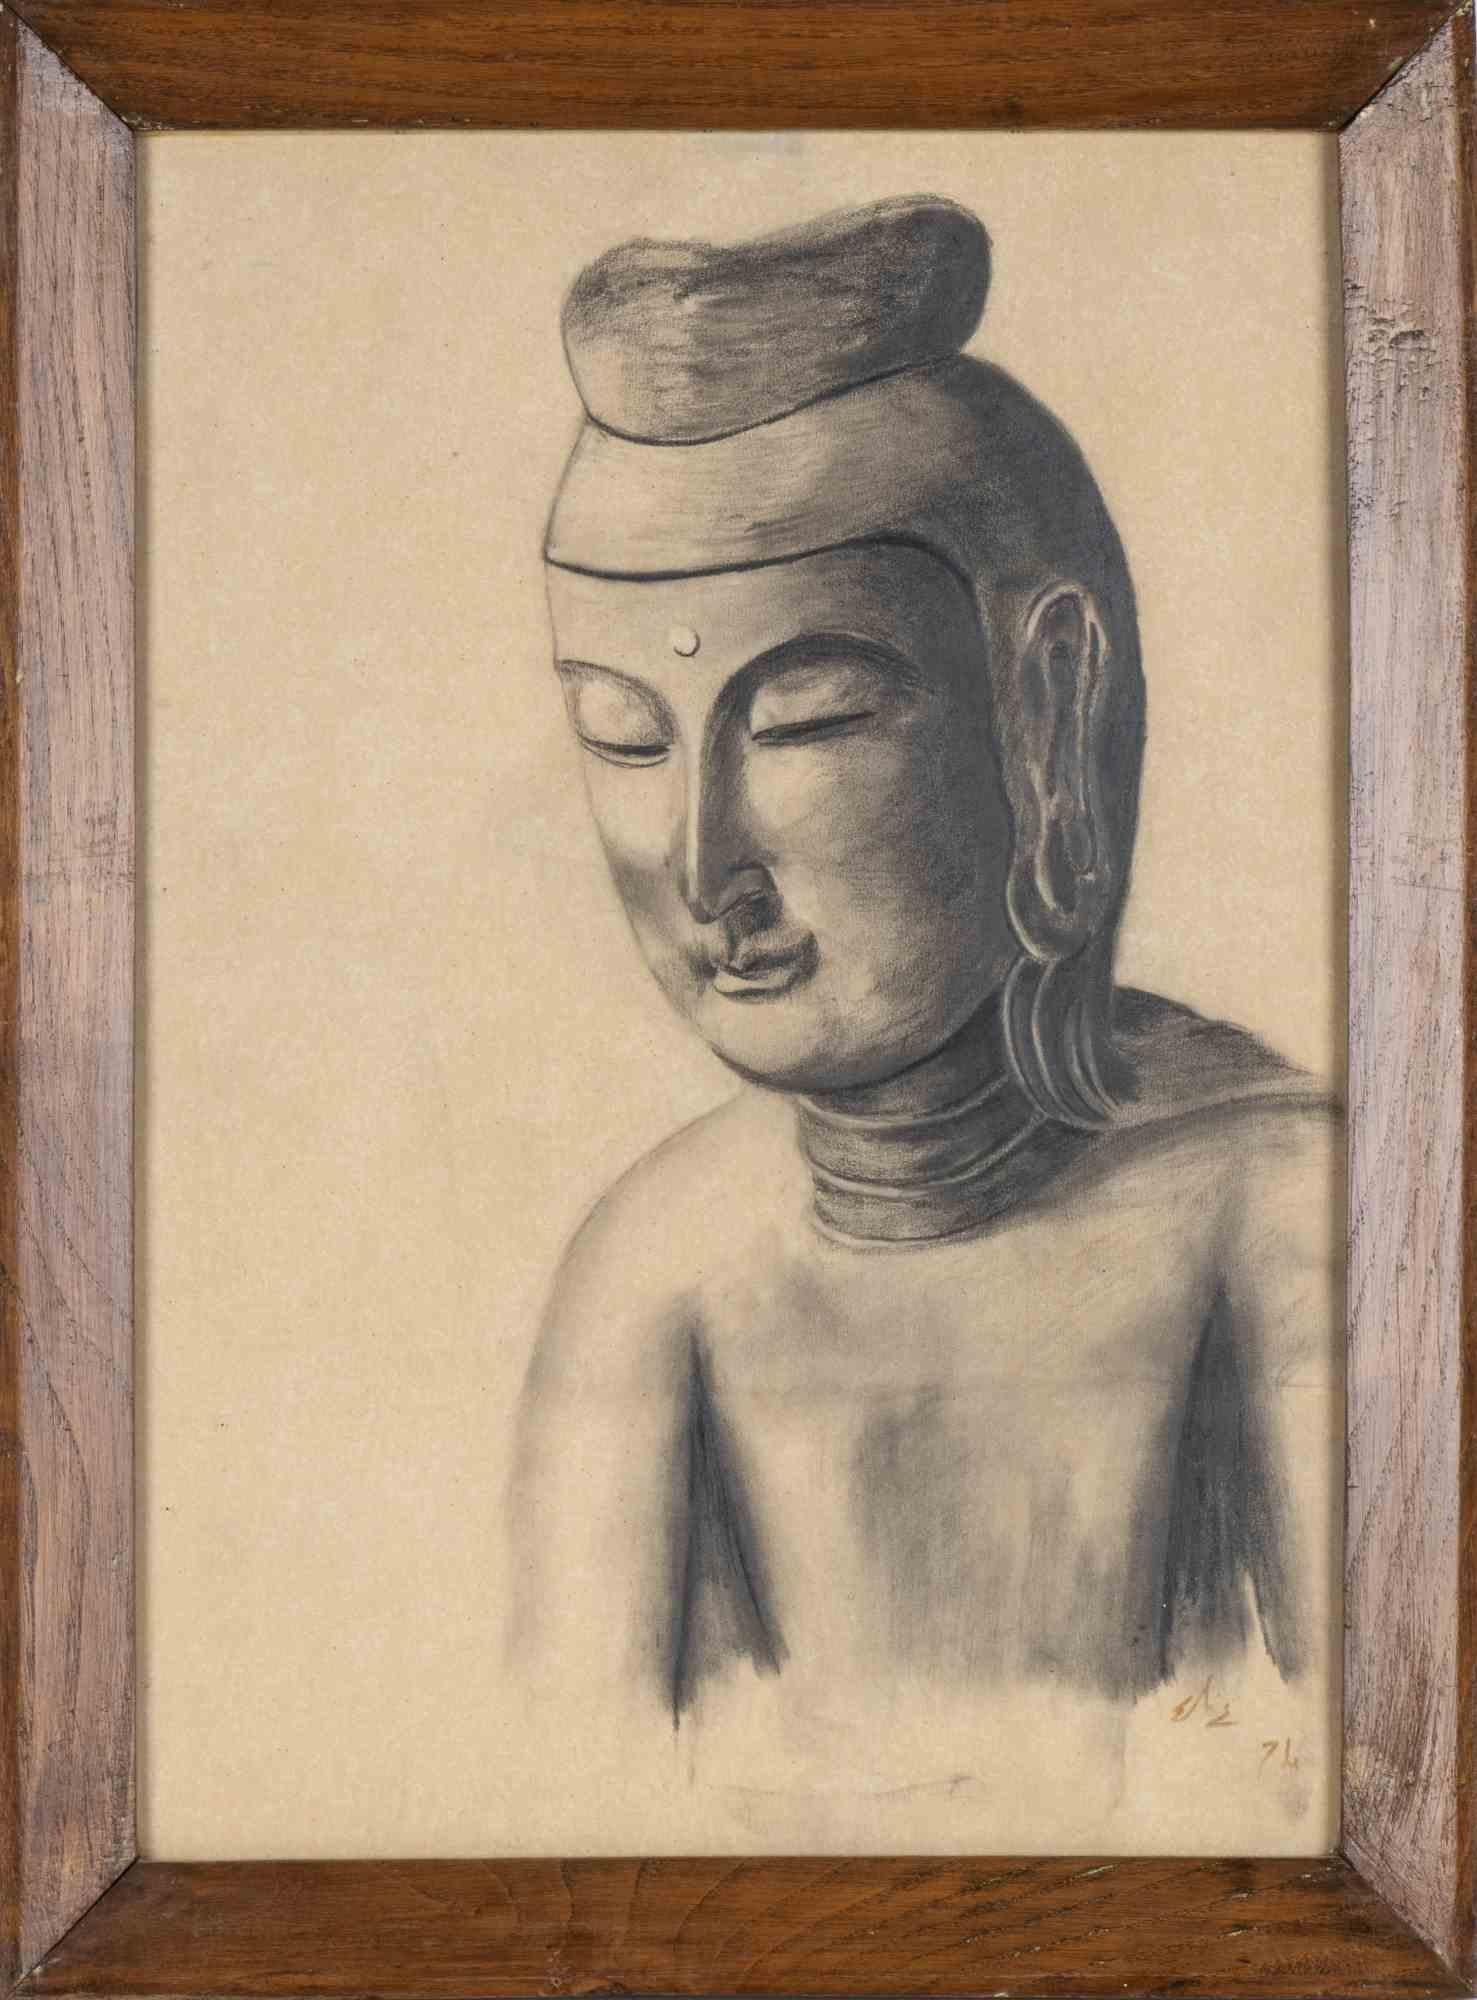 Unknown Figurative Art - Maitreya Buddha - Pencil on Paper - 1974